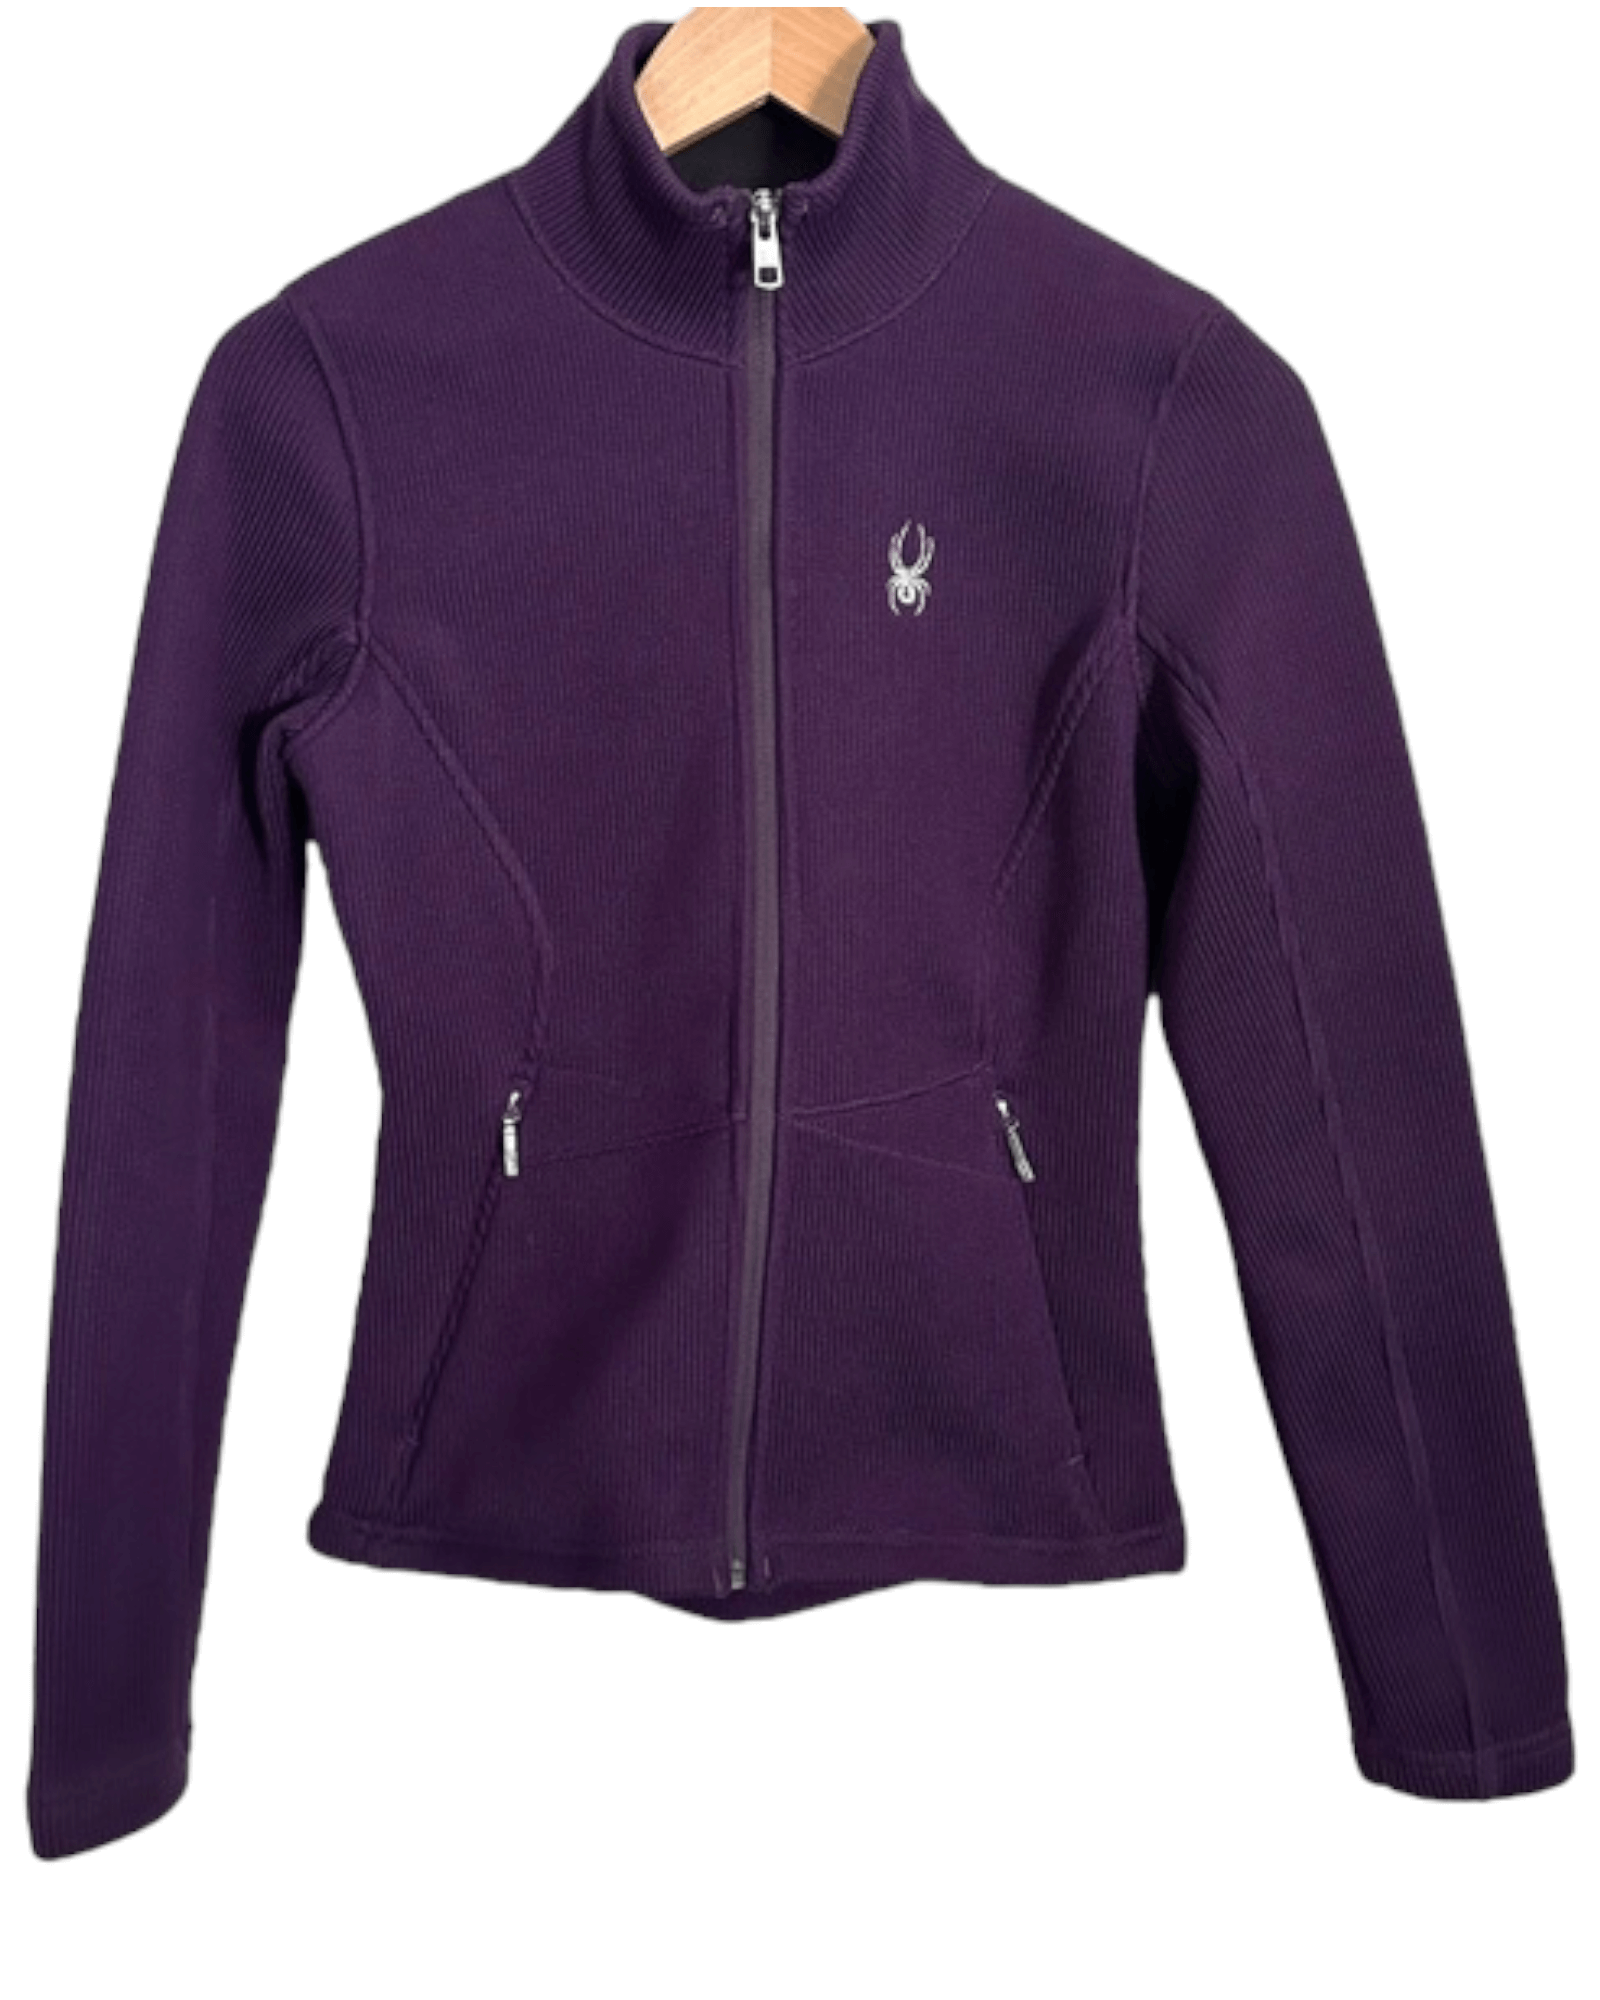 Dark Winter SPYDER royal purple ribbed mock neck ski sweater jacket